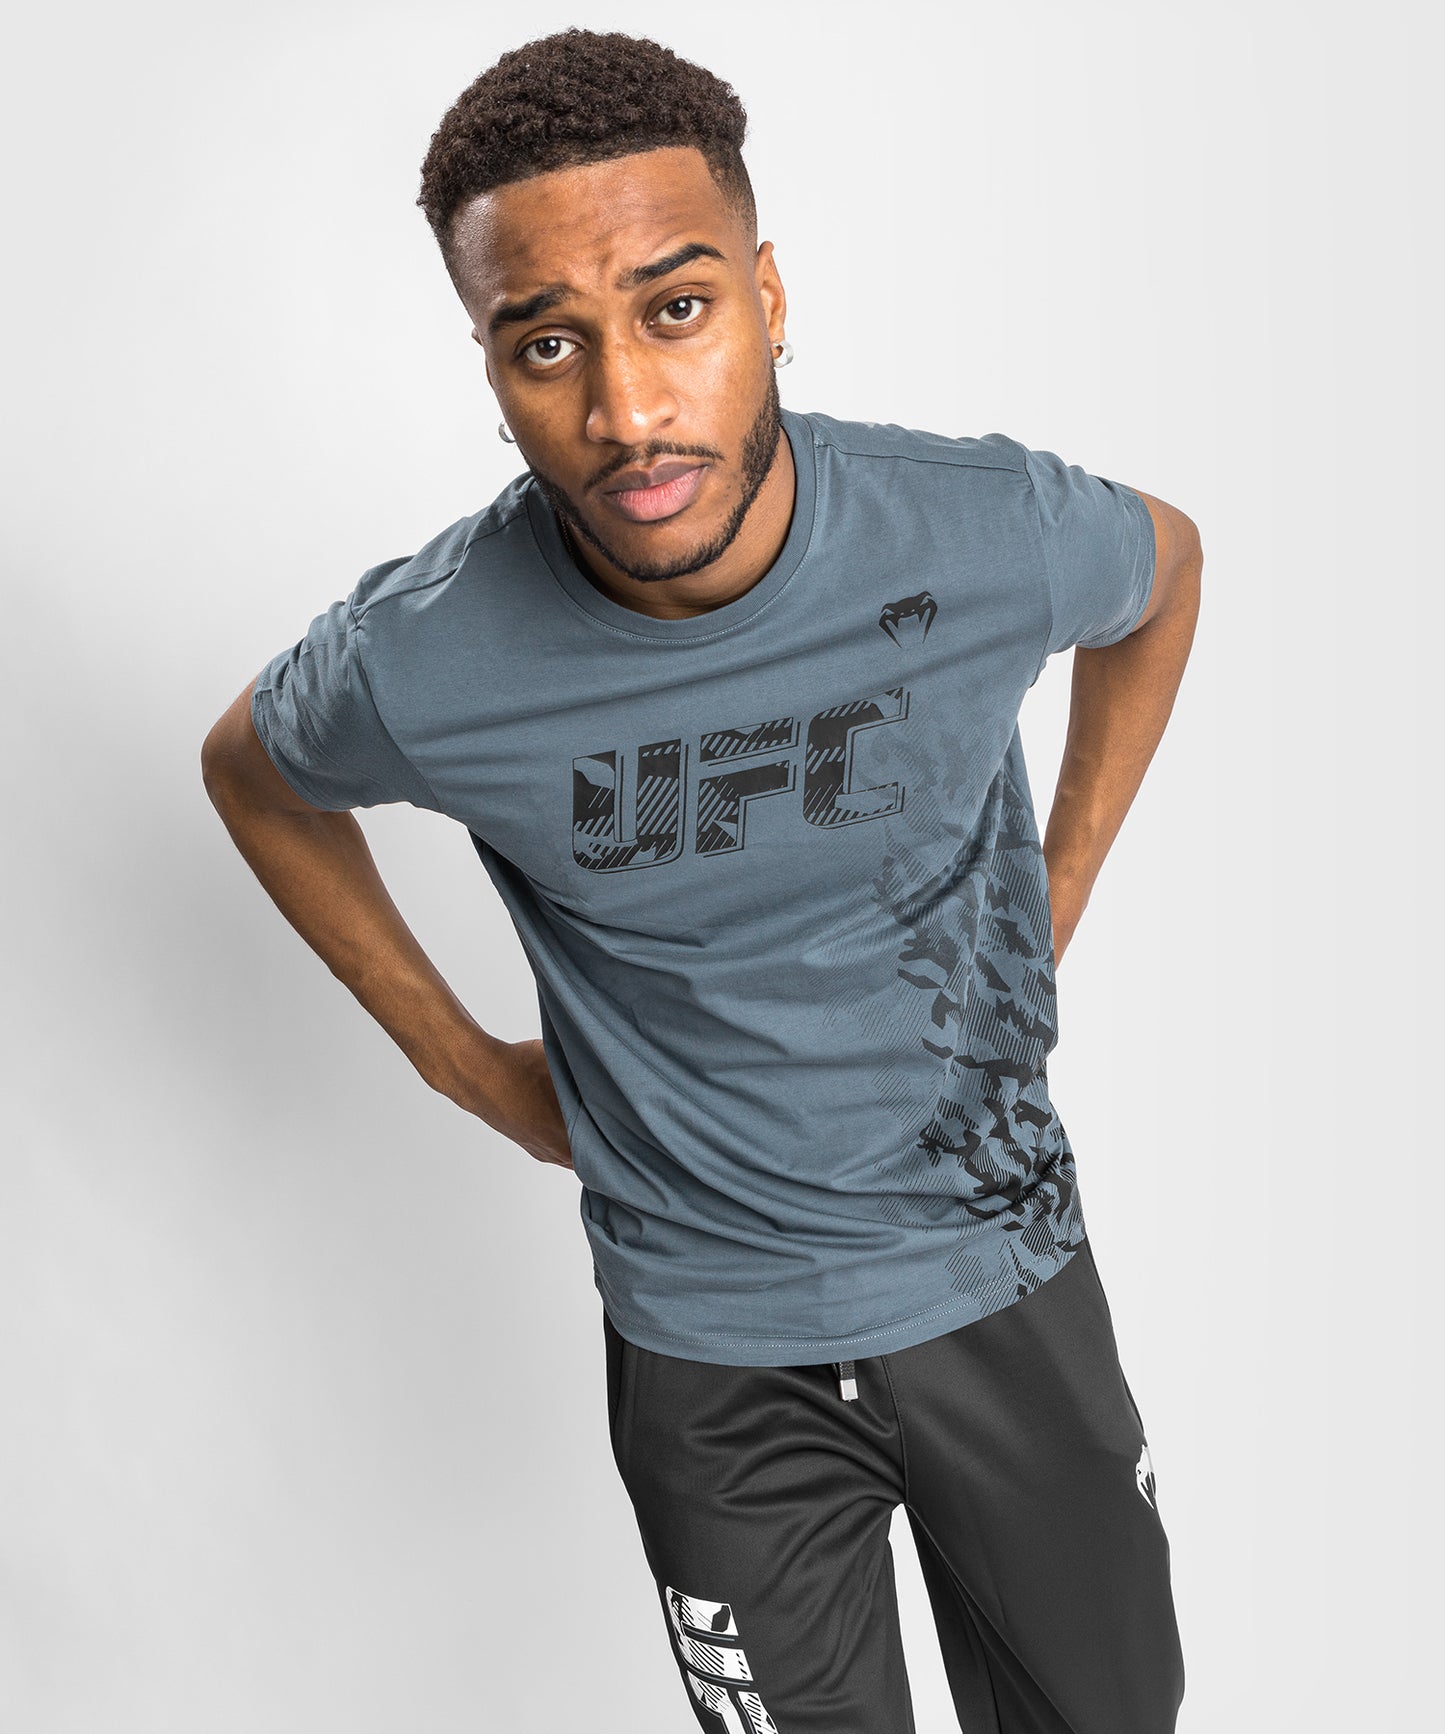 Camiseta De Algodón Manga Corta Para Hombre UFC Venum Authentic Fight Week - Gris